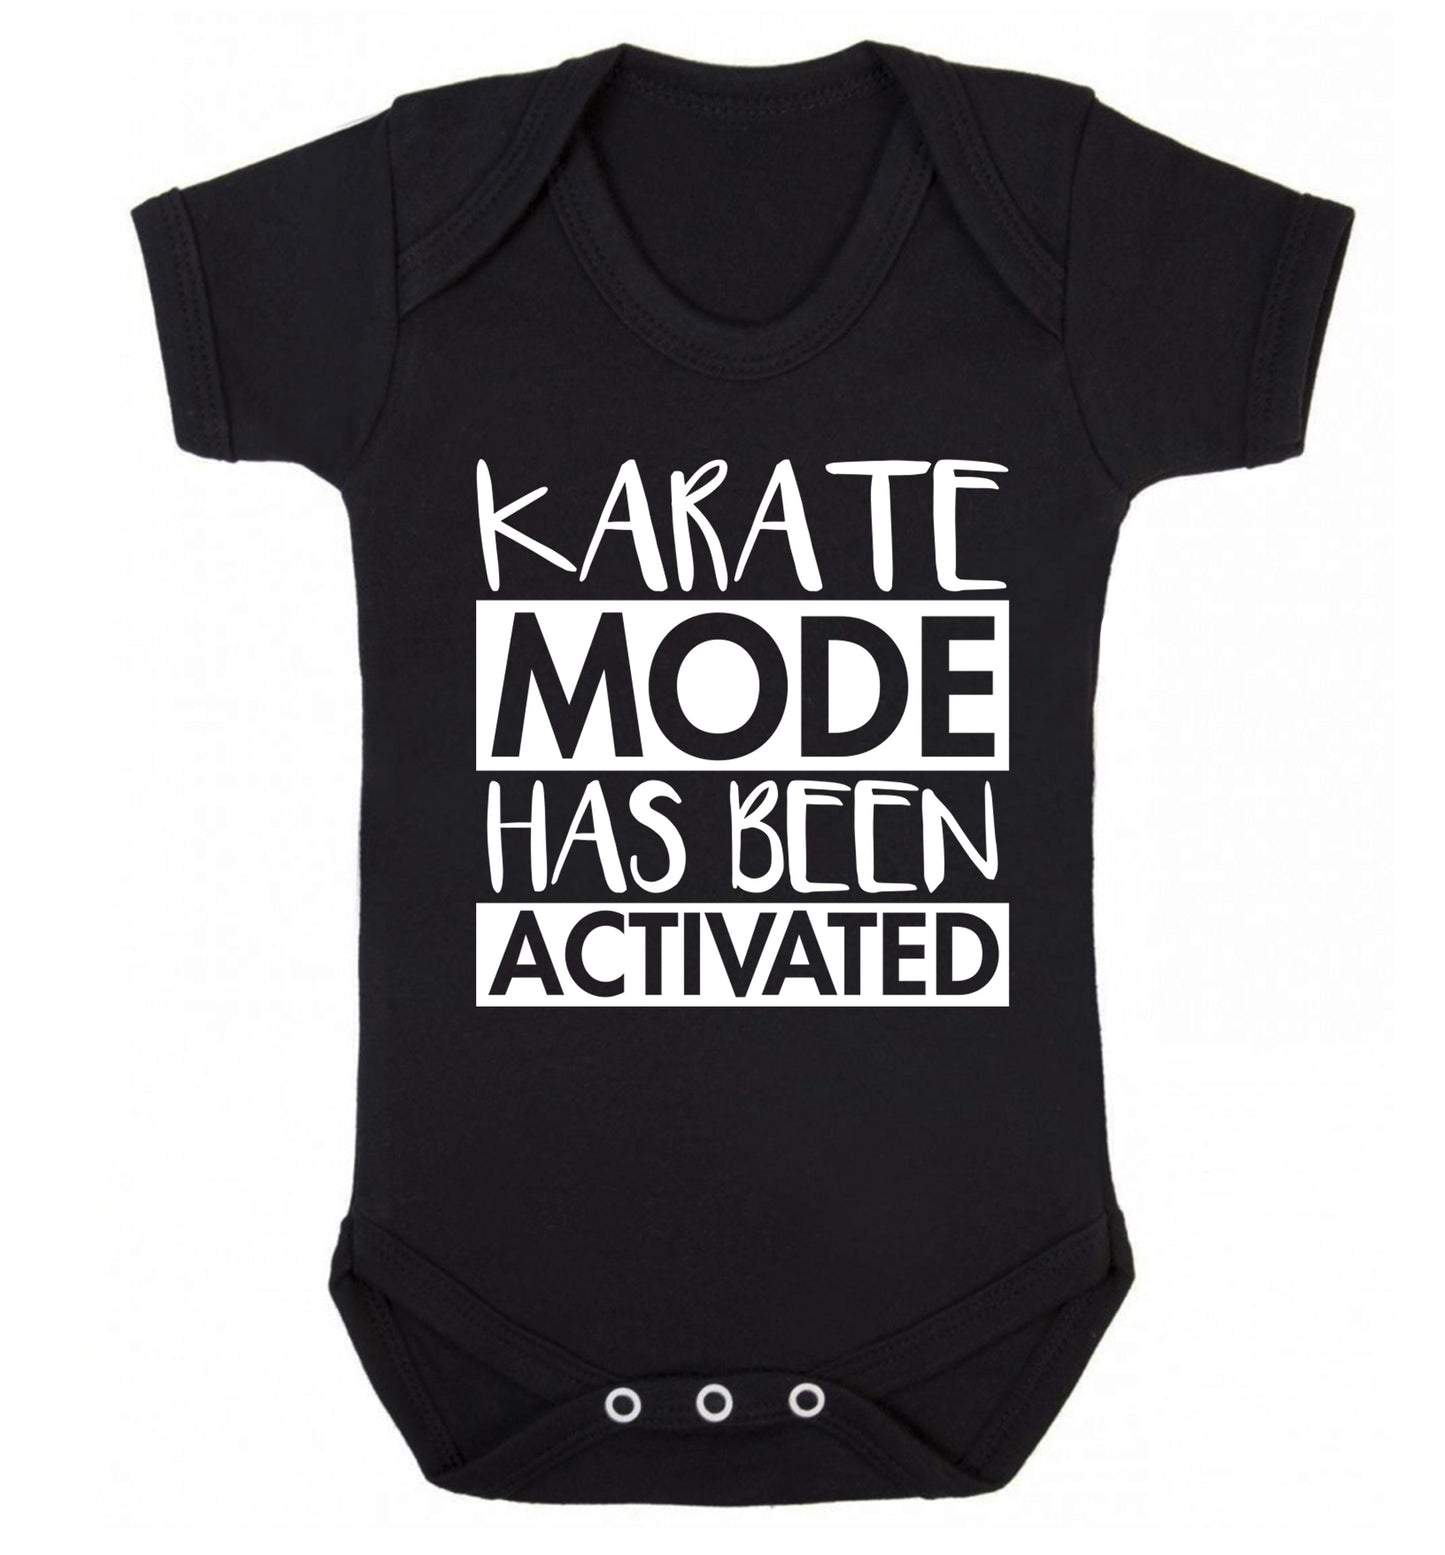 Karate mode activated Baby Vest black 18-24 months